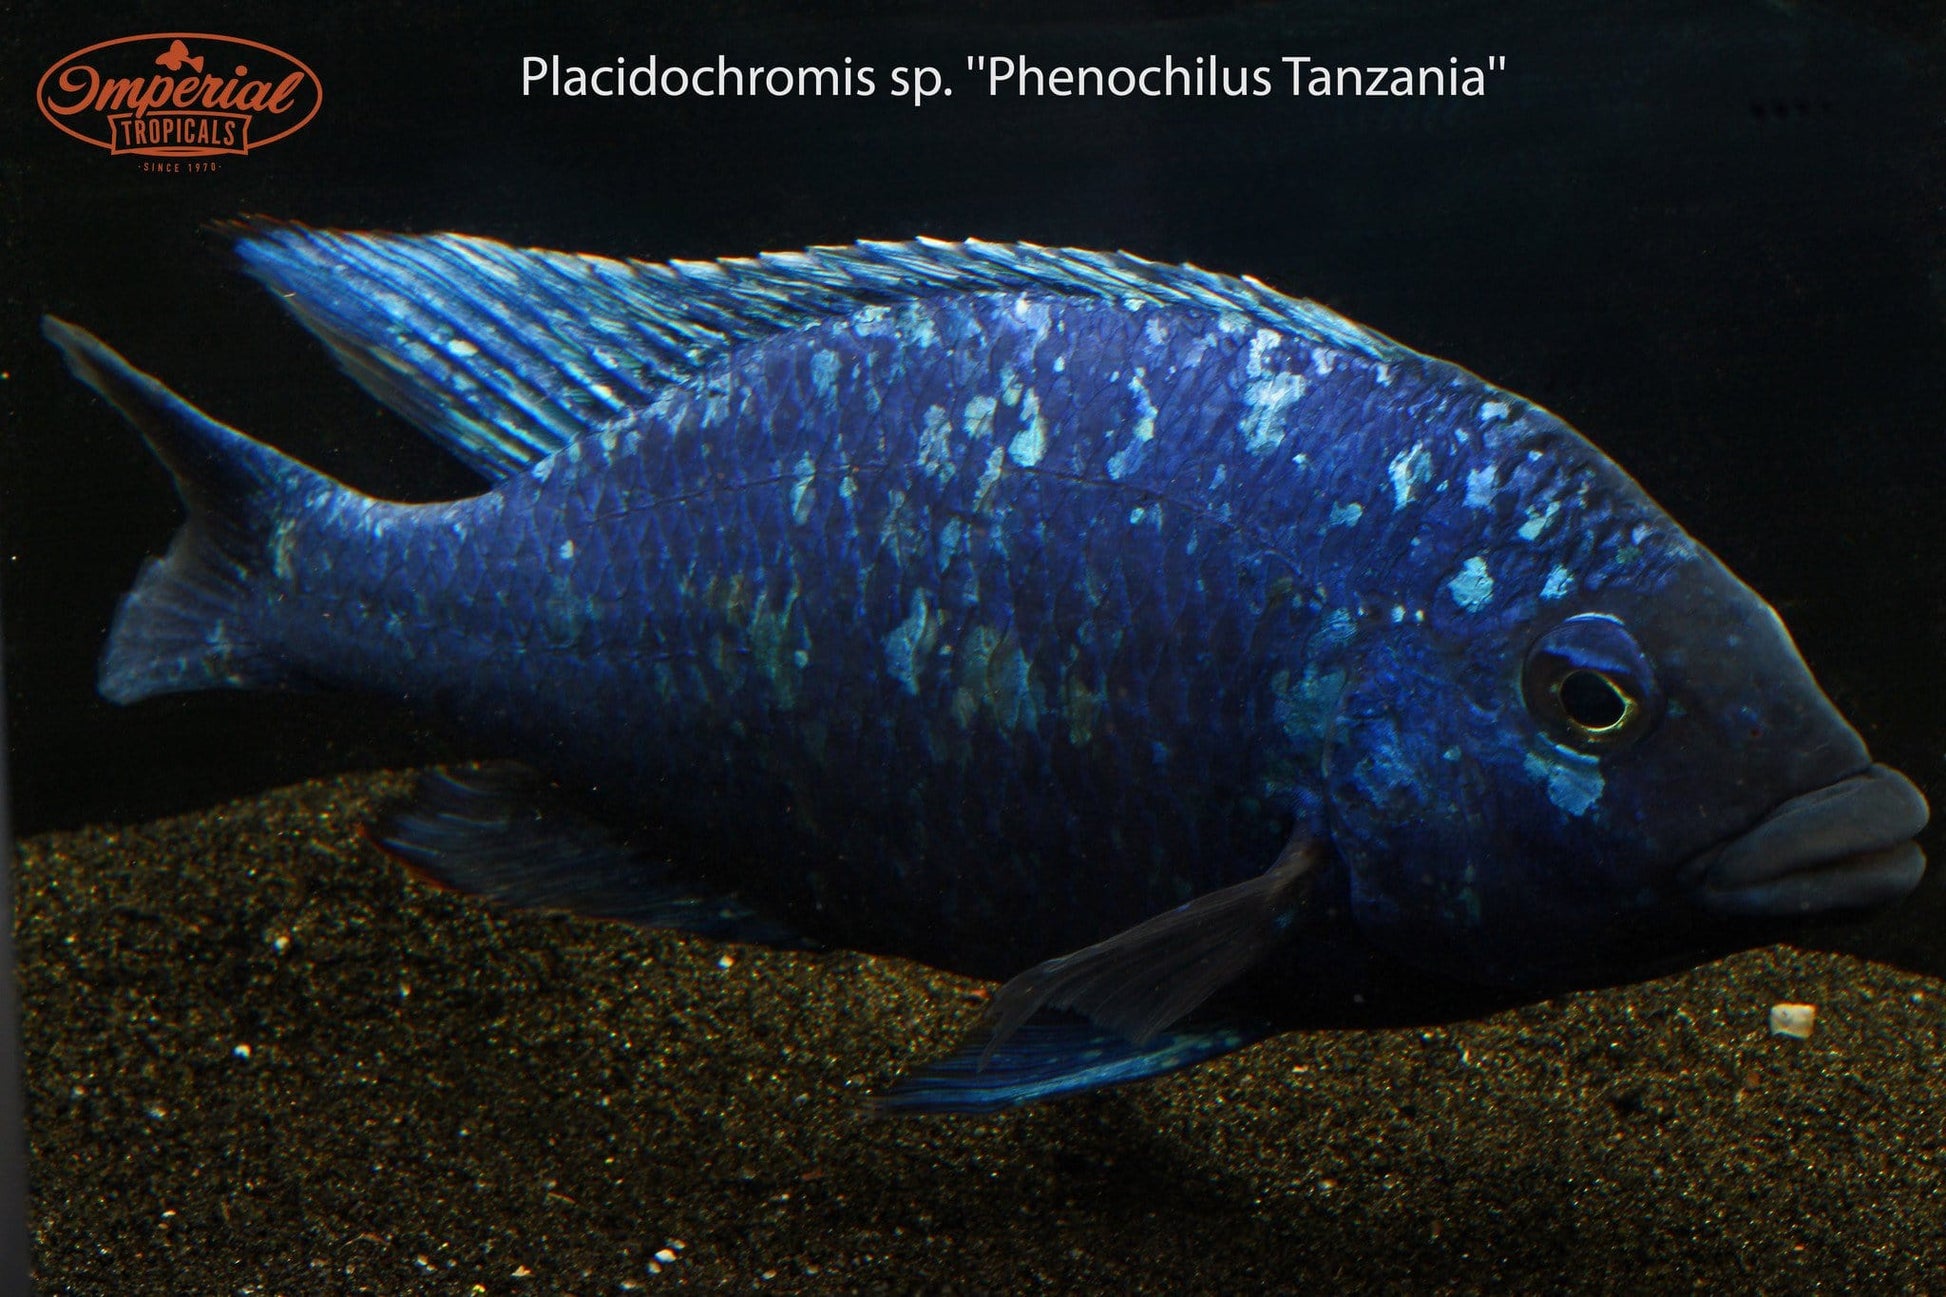 Star Sapphire (Placidochromis sp. Phenochilus Tanzania) - Imperial Tropicals